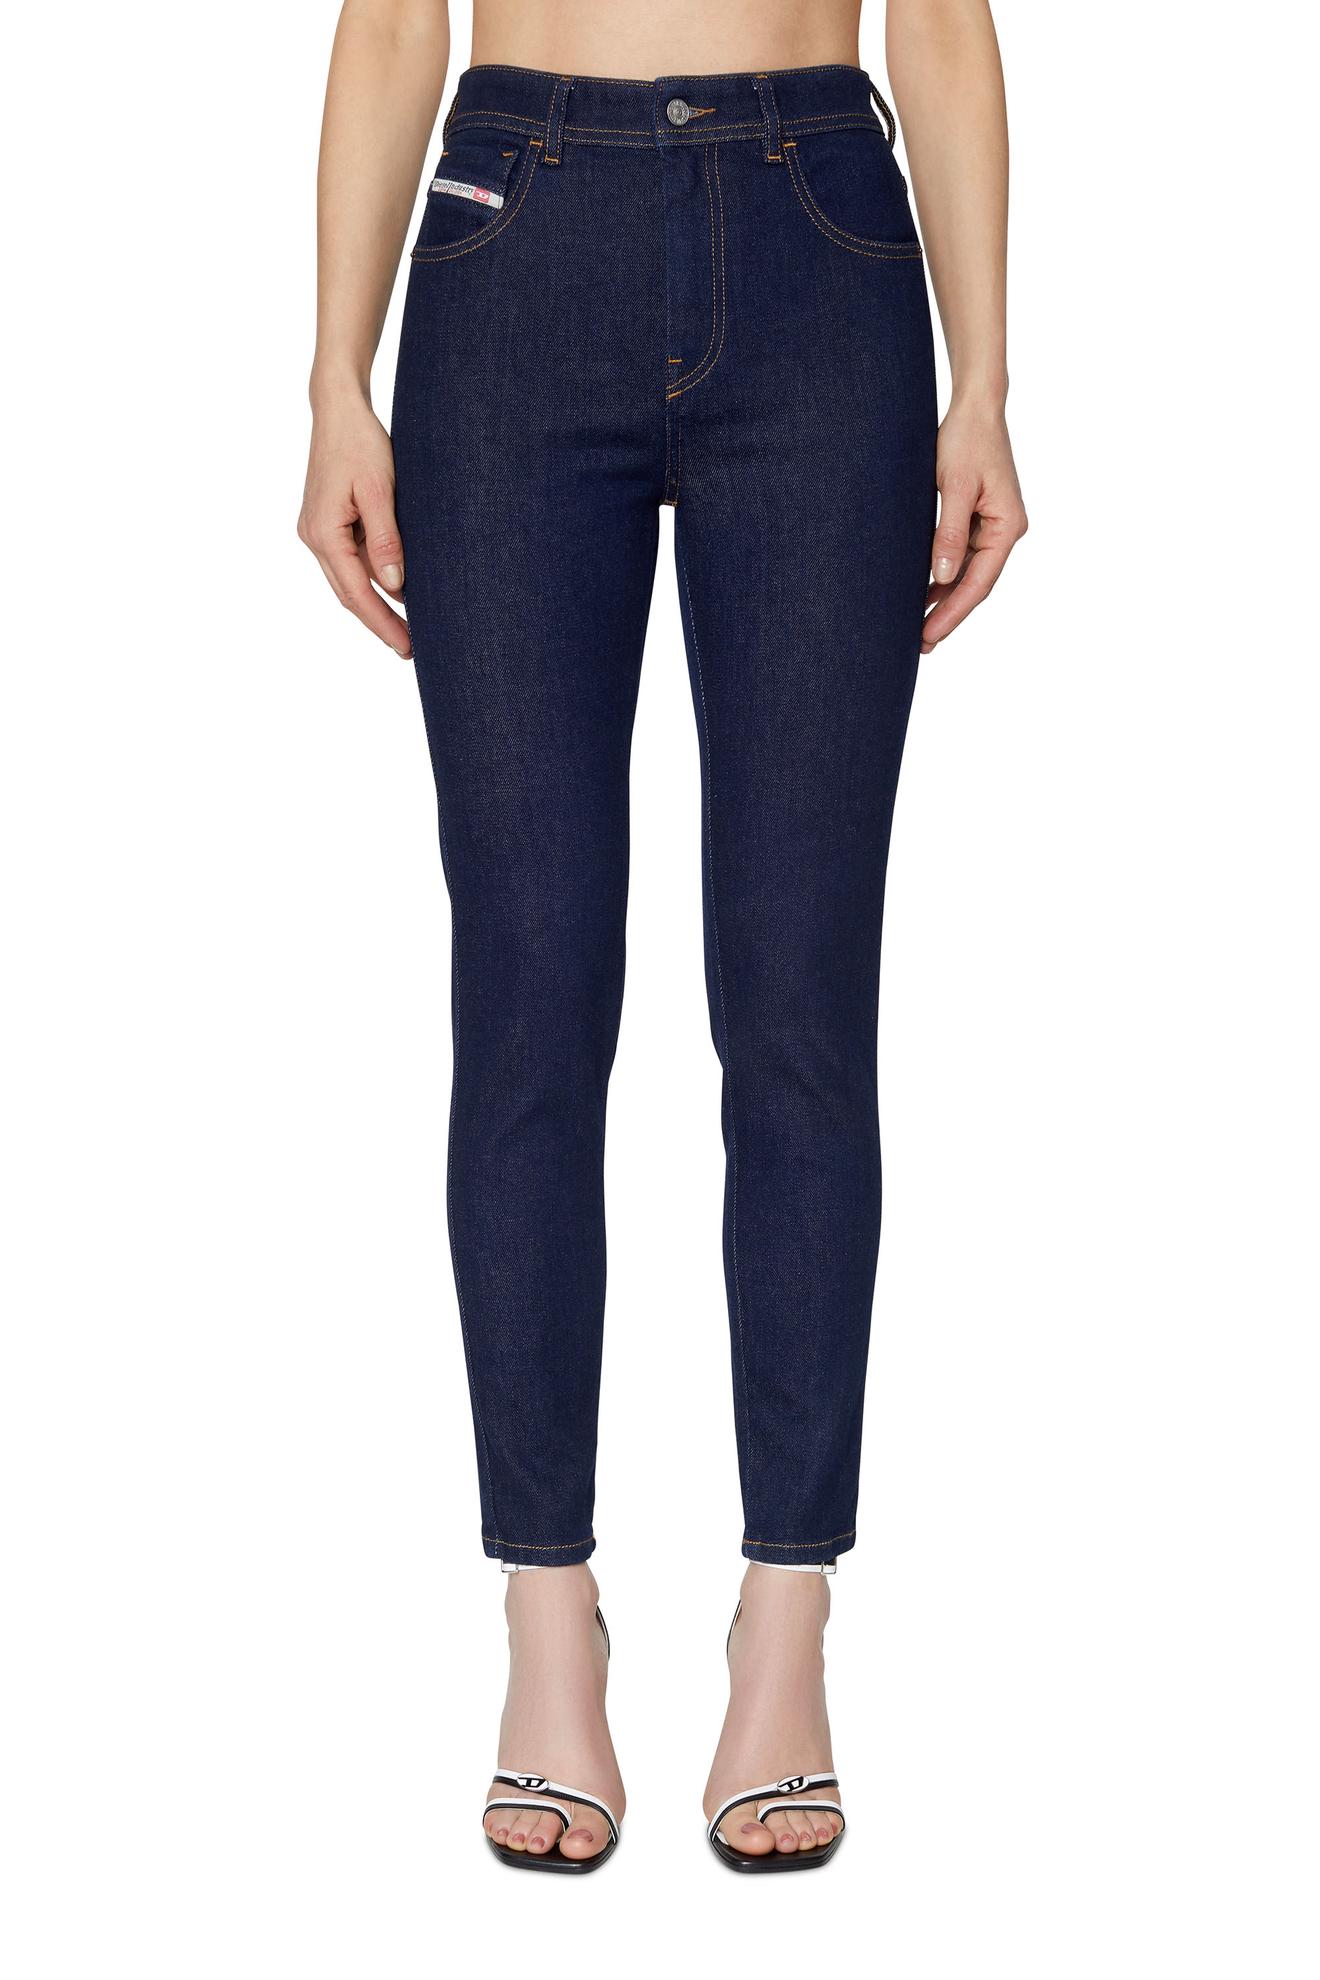 Super skinny Jeans - 1984 Slandy-High offers at $191 in Diesel